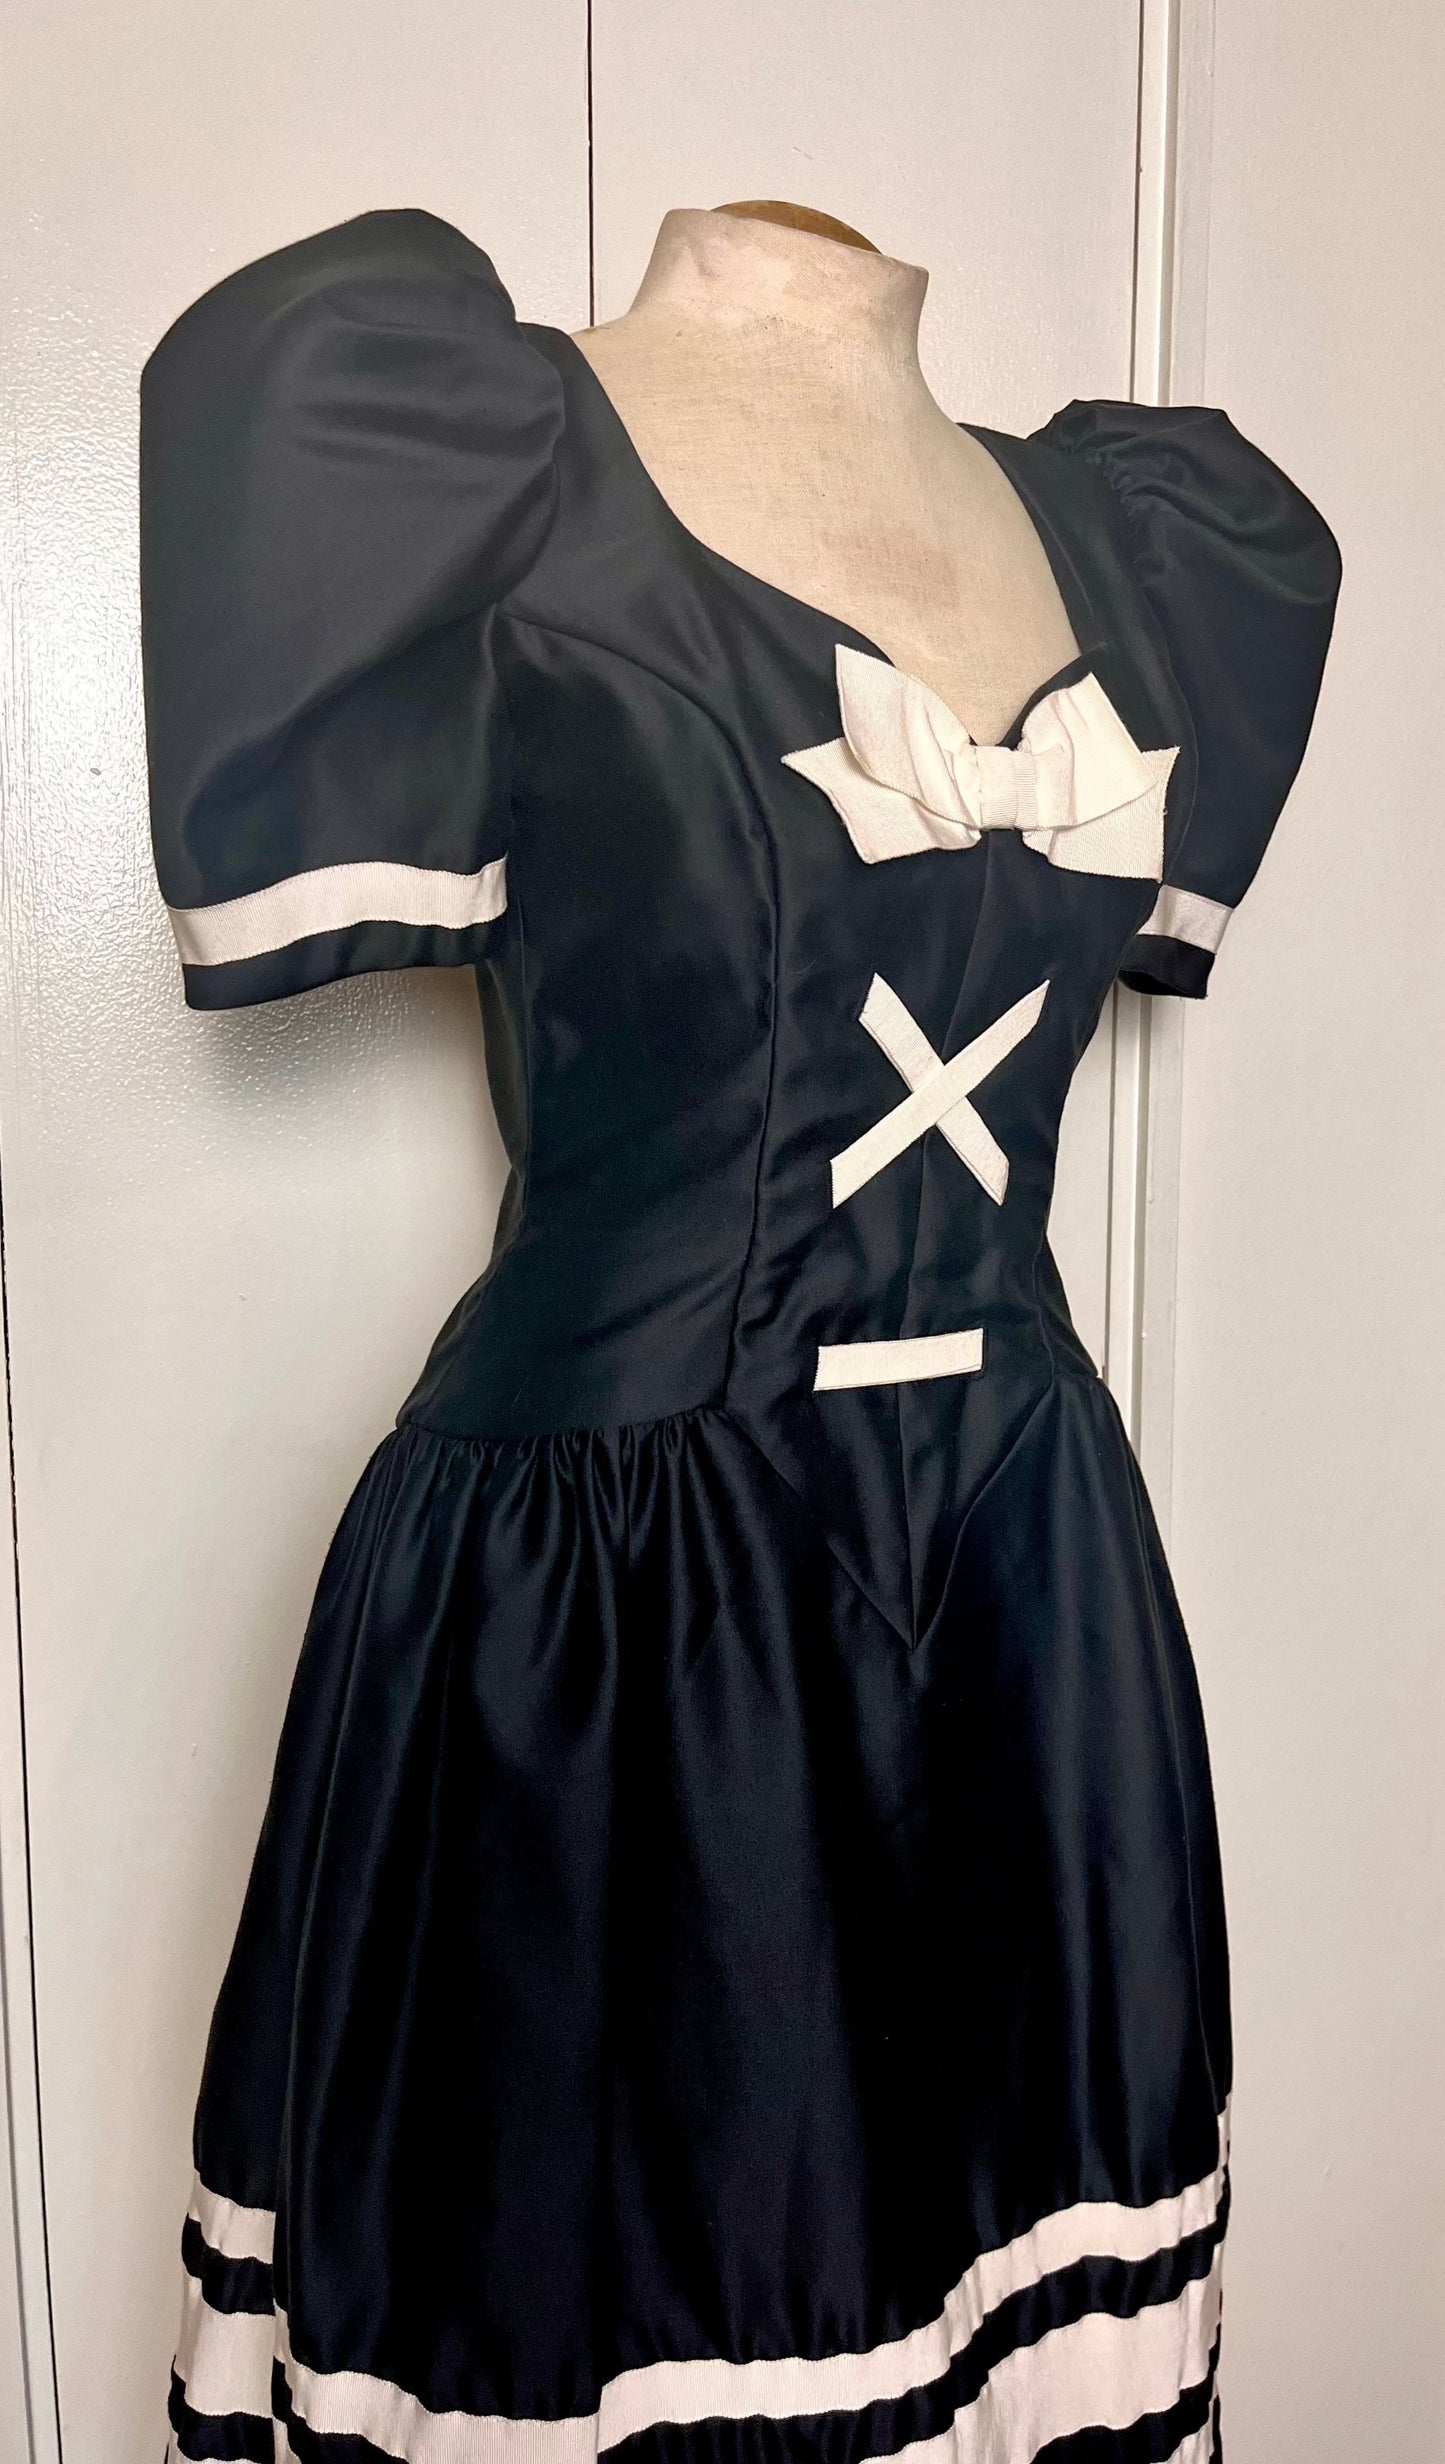 Vintage 1980's "Victor Costa" Black Bow Corset Dress